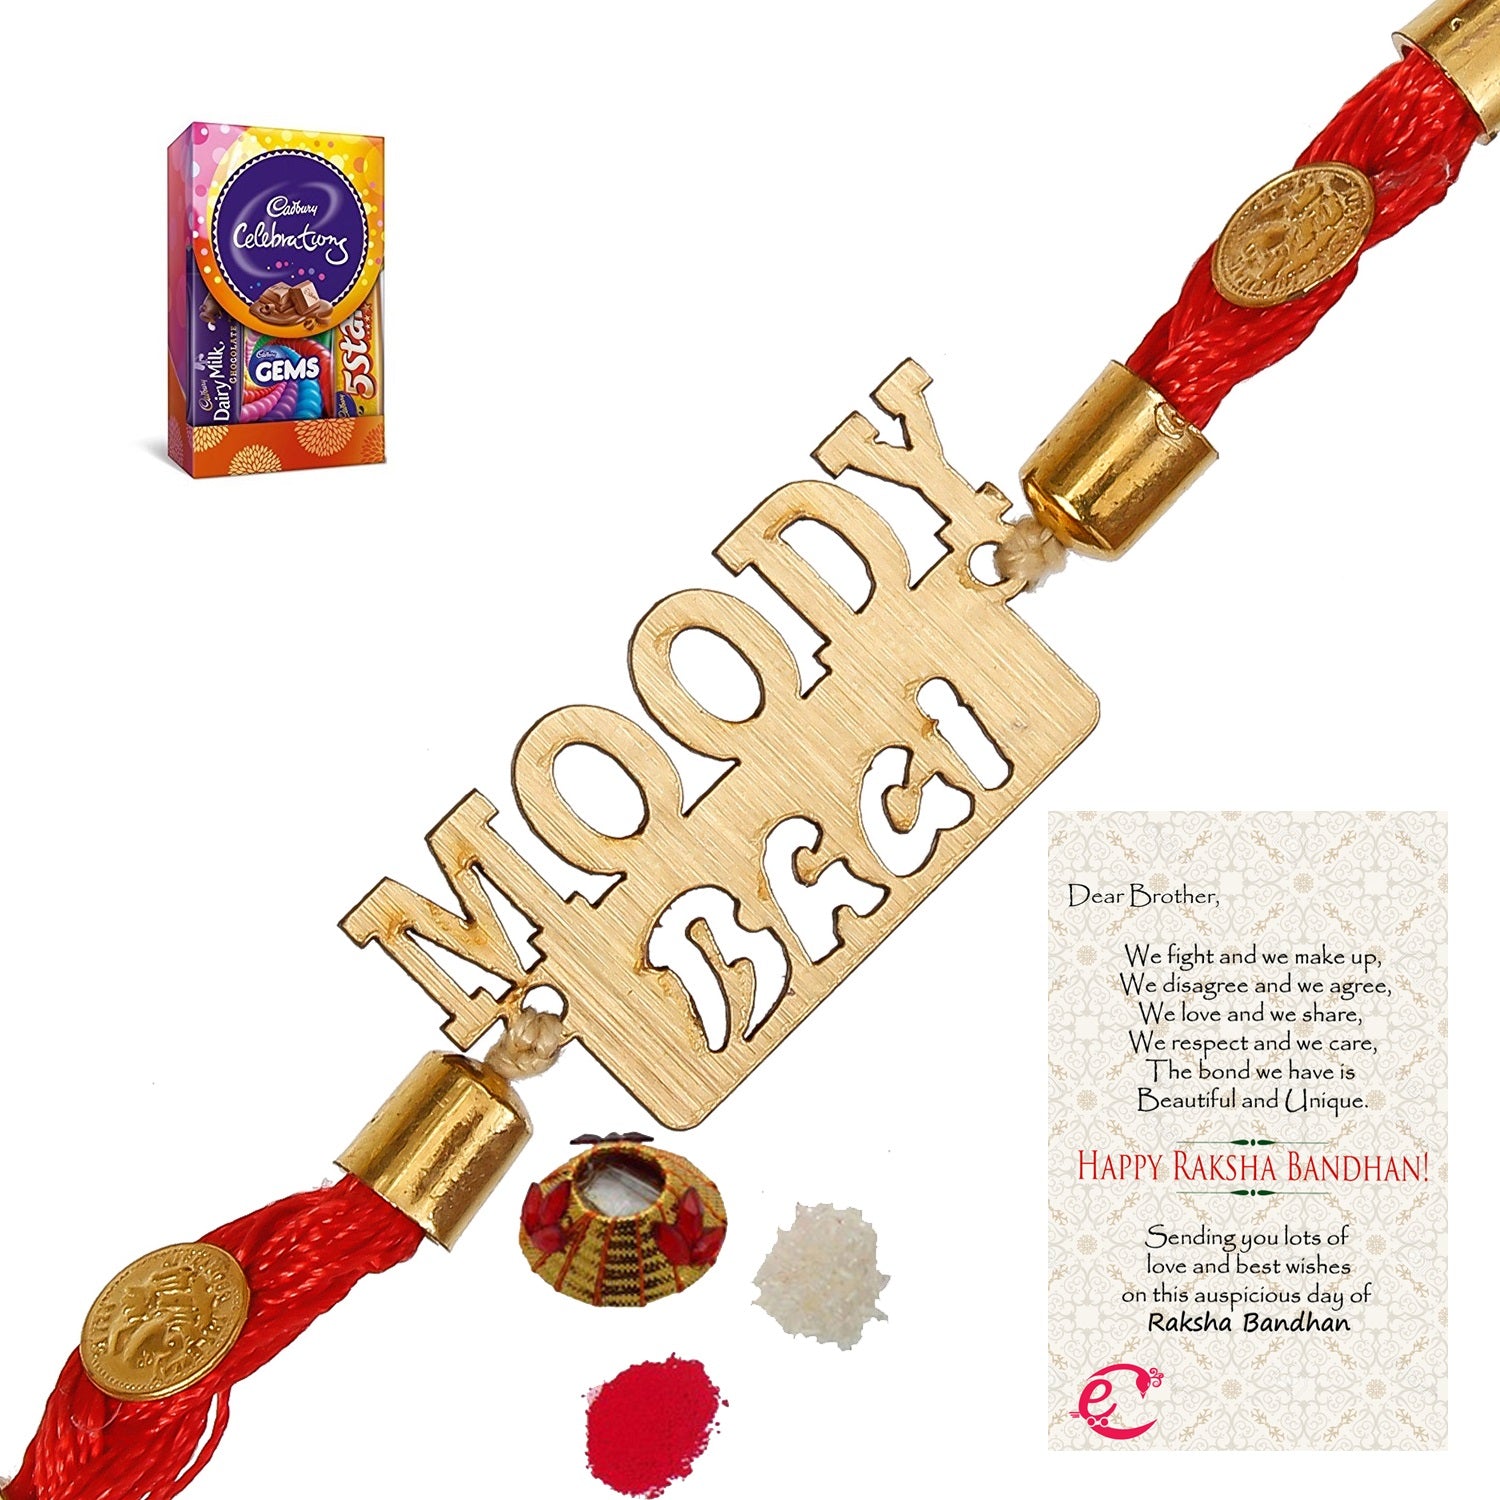 Designer Wooden Moddy Bhai Rakhi with Cadbury Celebrations Gift Pack of 5 Assorted Chocolates and Roli Tikka Matki, Best Wishes Greeting Card